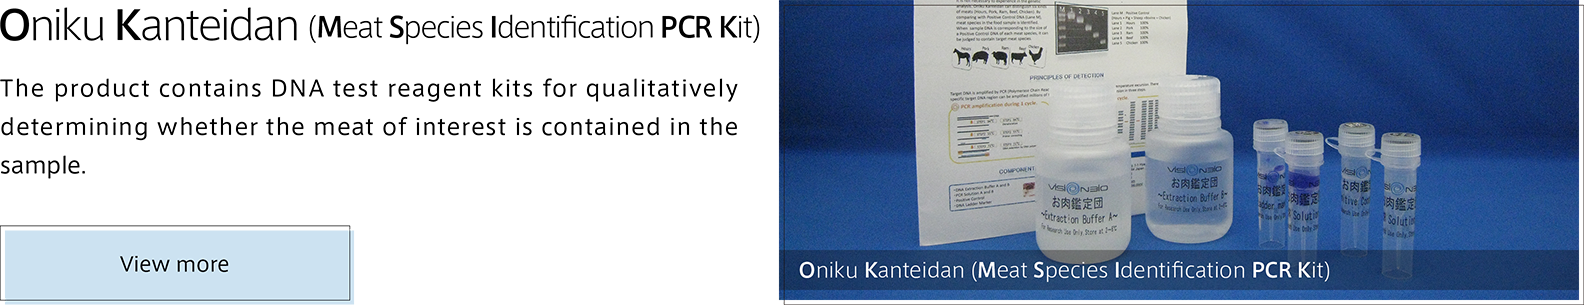 Oniku Kanteidan (Meat Species Identification PCR Kit)